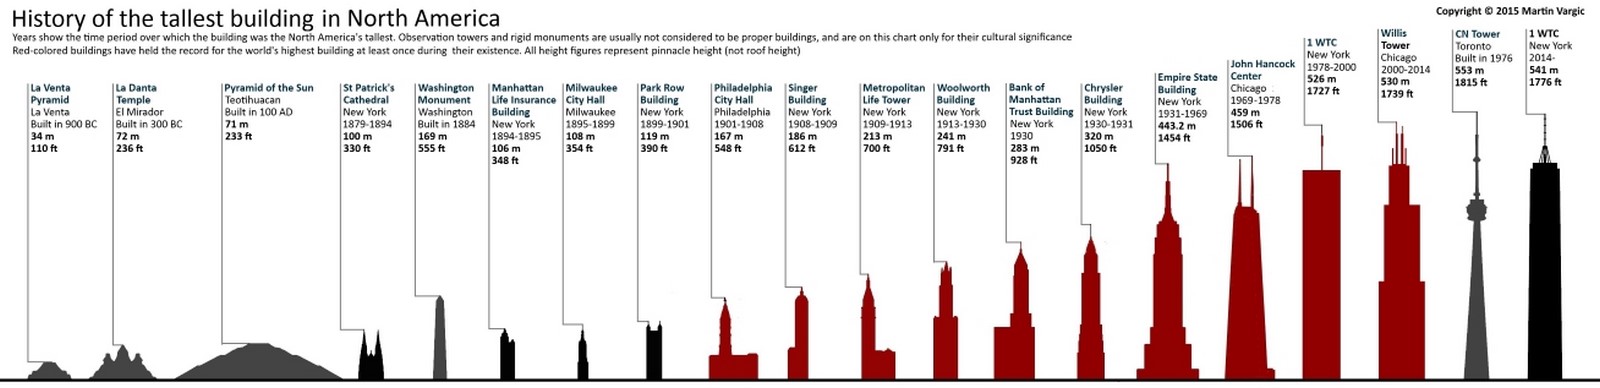 Tallest buildings: Continent wide data - Sheet3